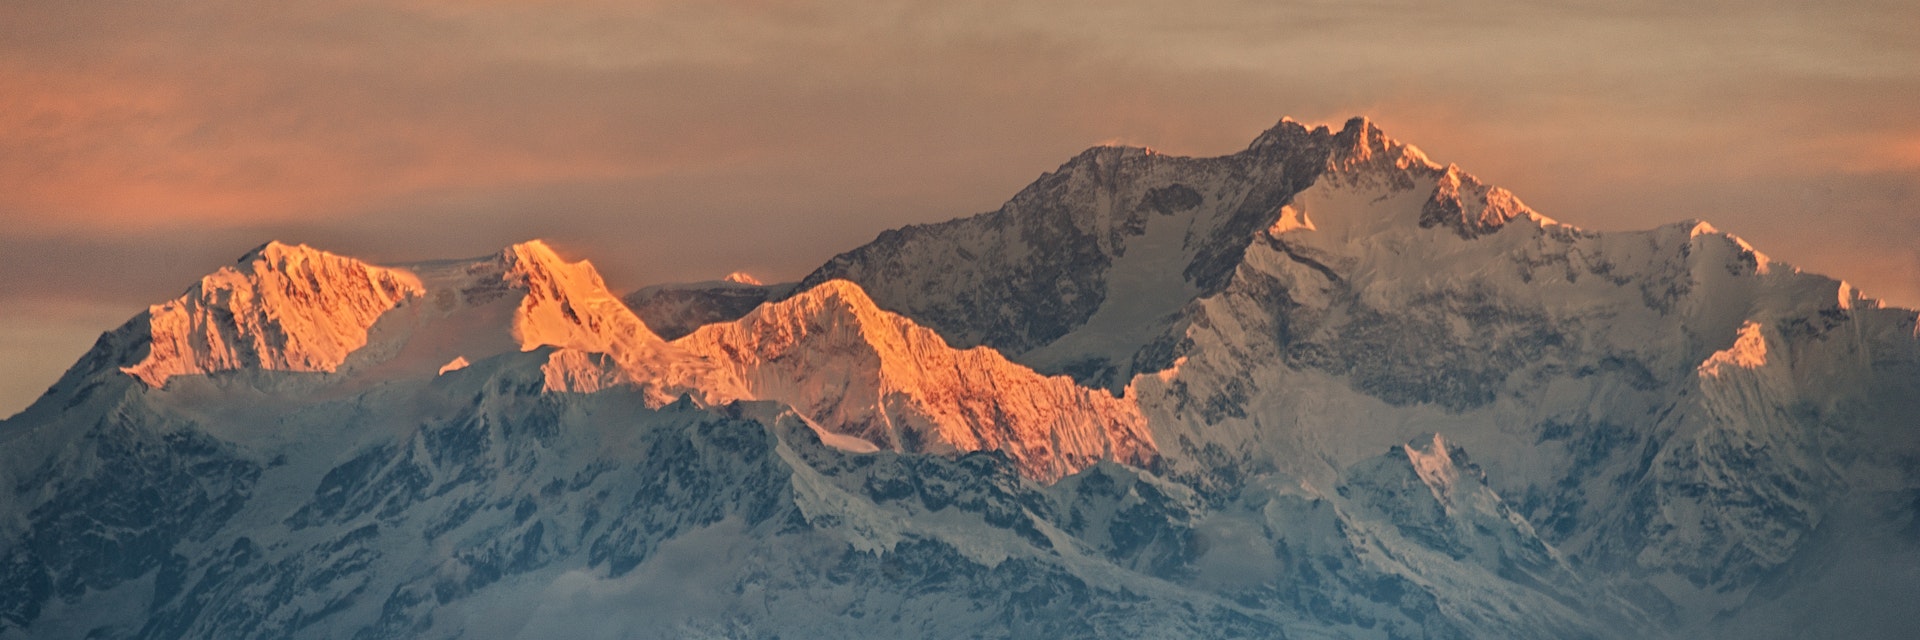 Sunrise over mount Kanchenjunga, Tiger Hill